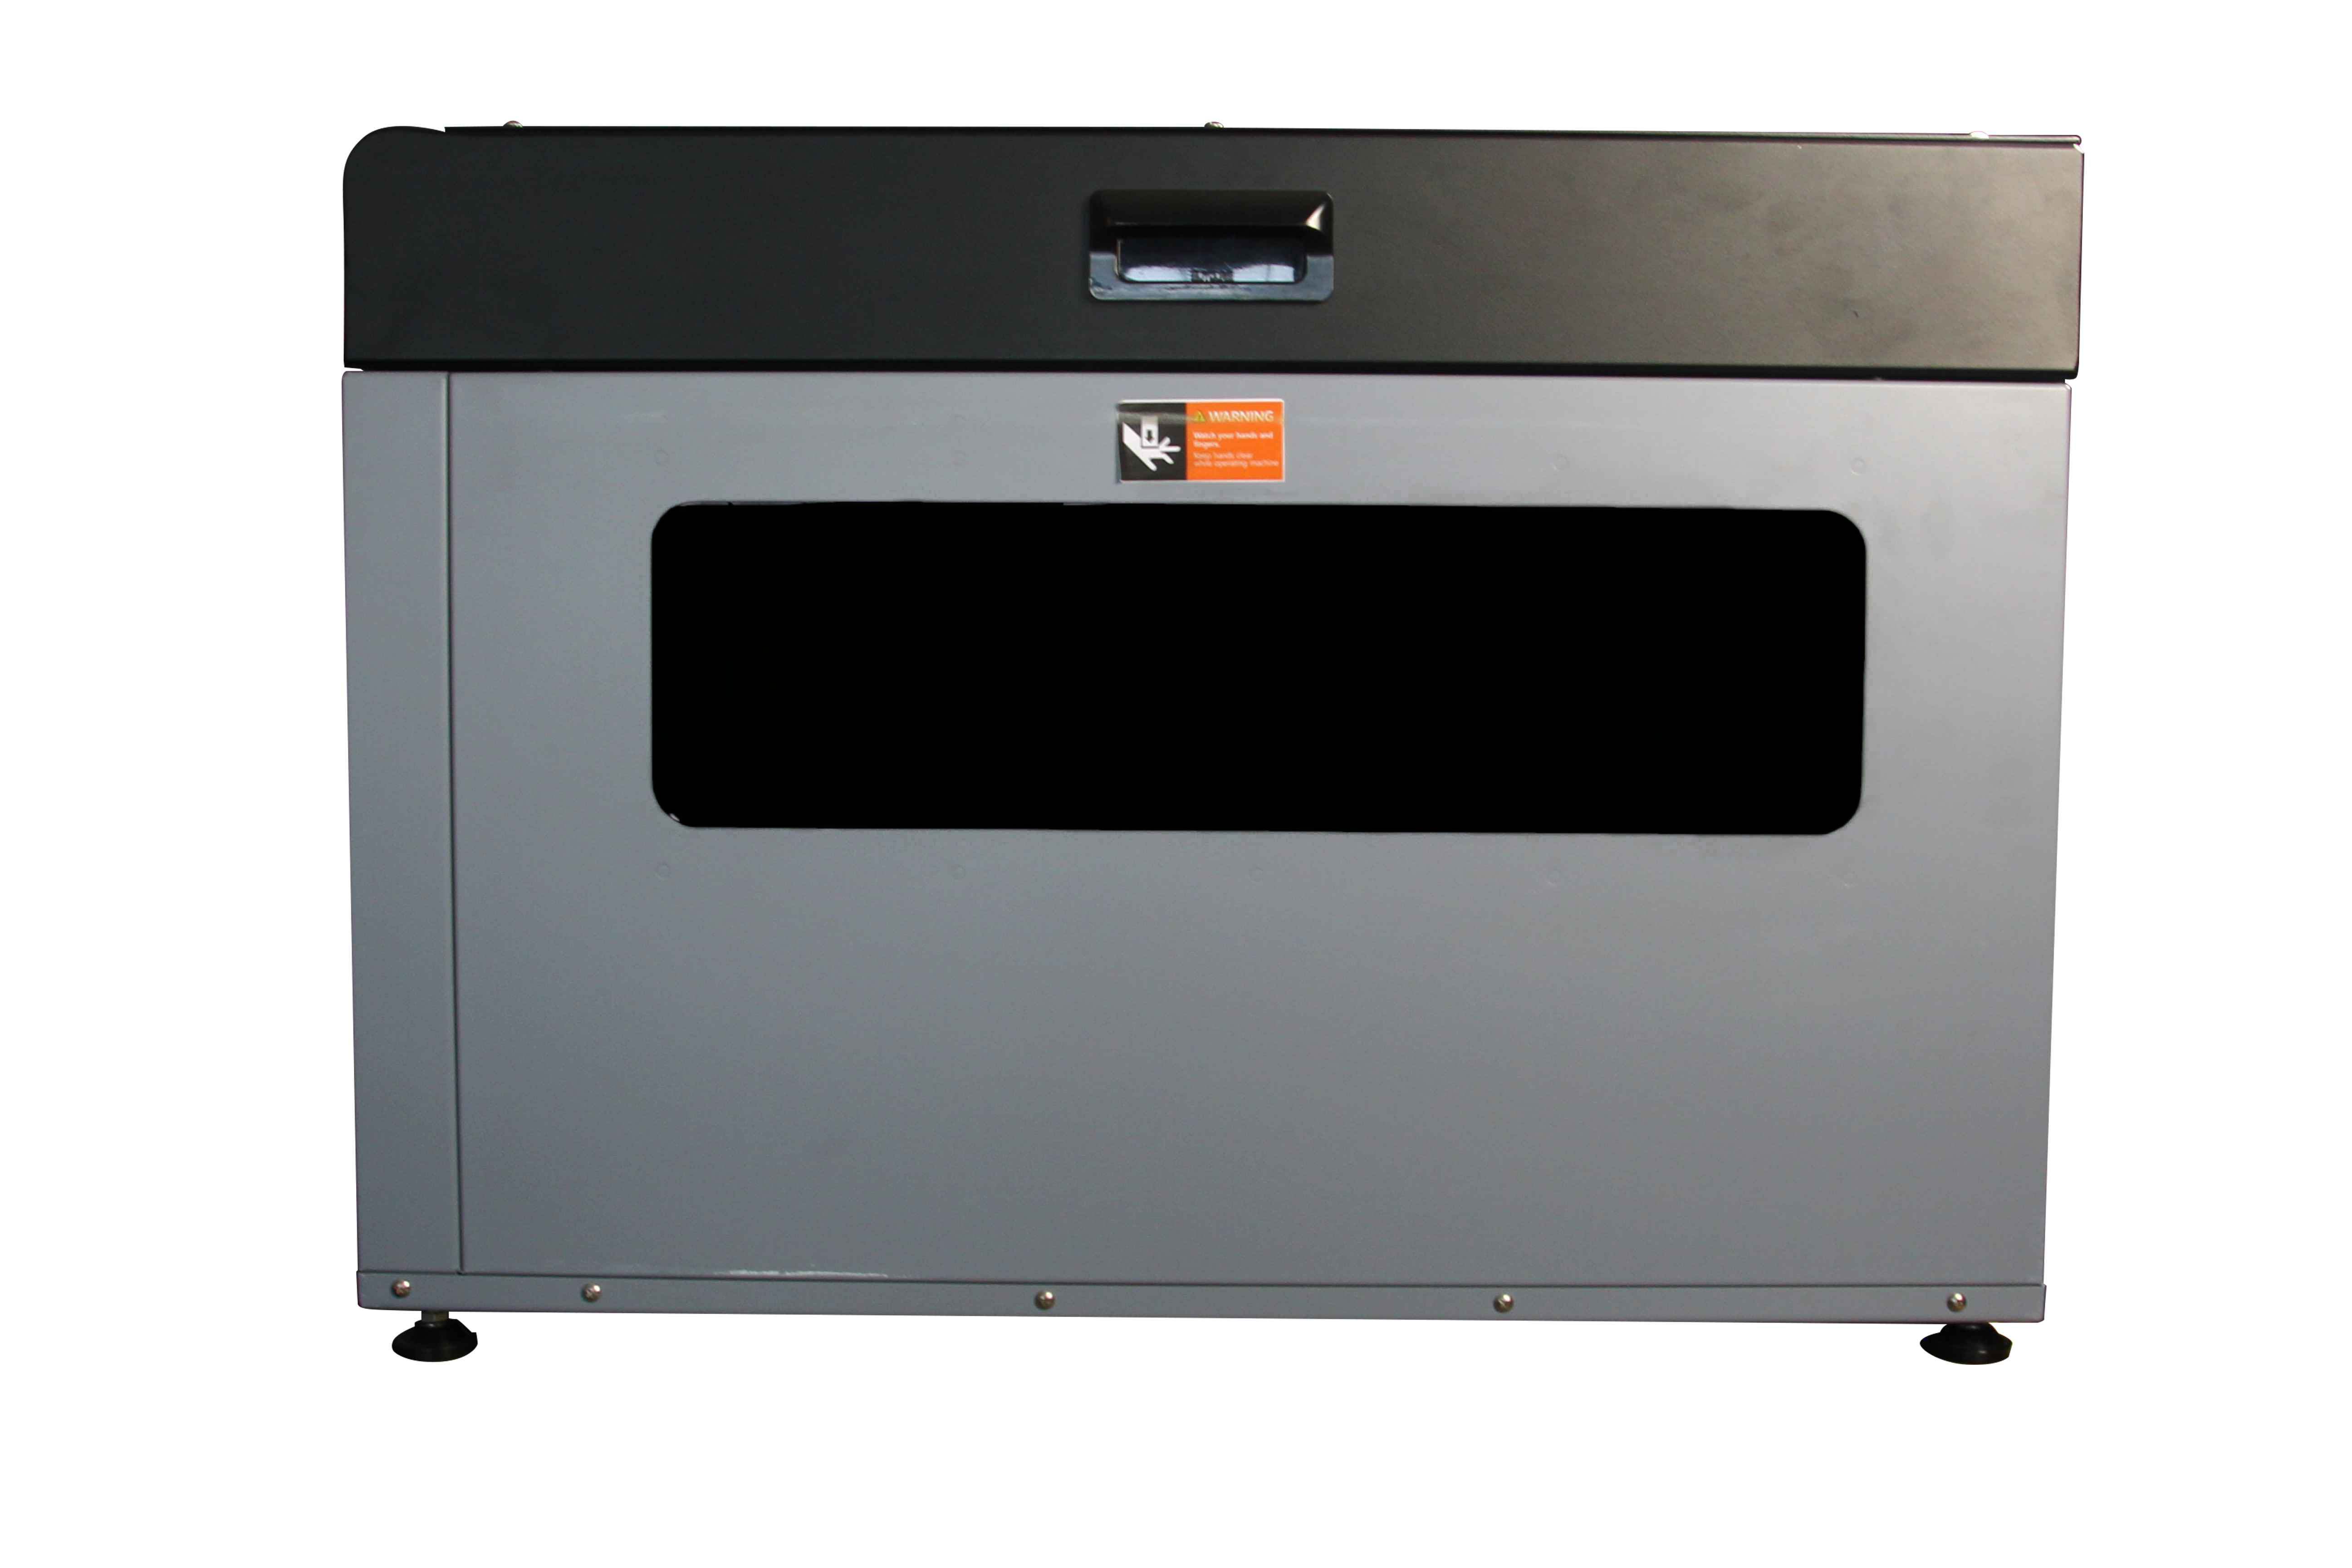 Refurbished Mister T1 Pretreatment Machine - Joto Imaging Supplies Canada